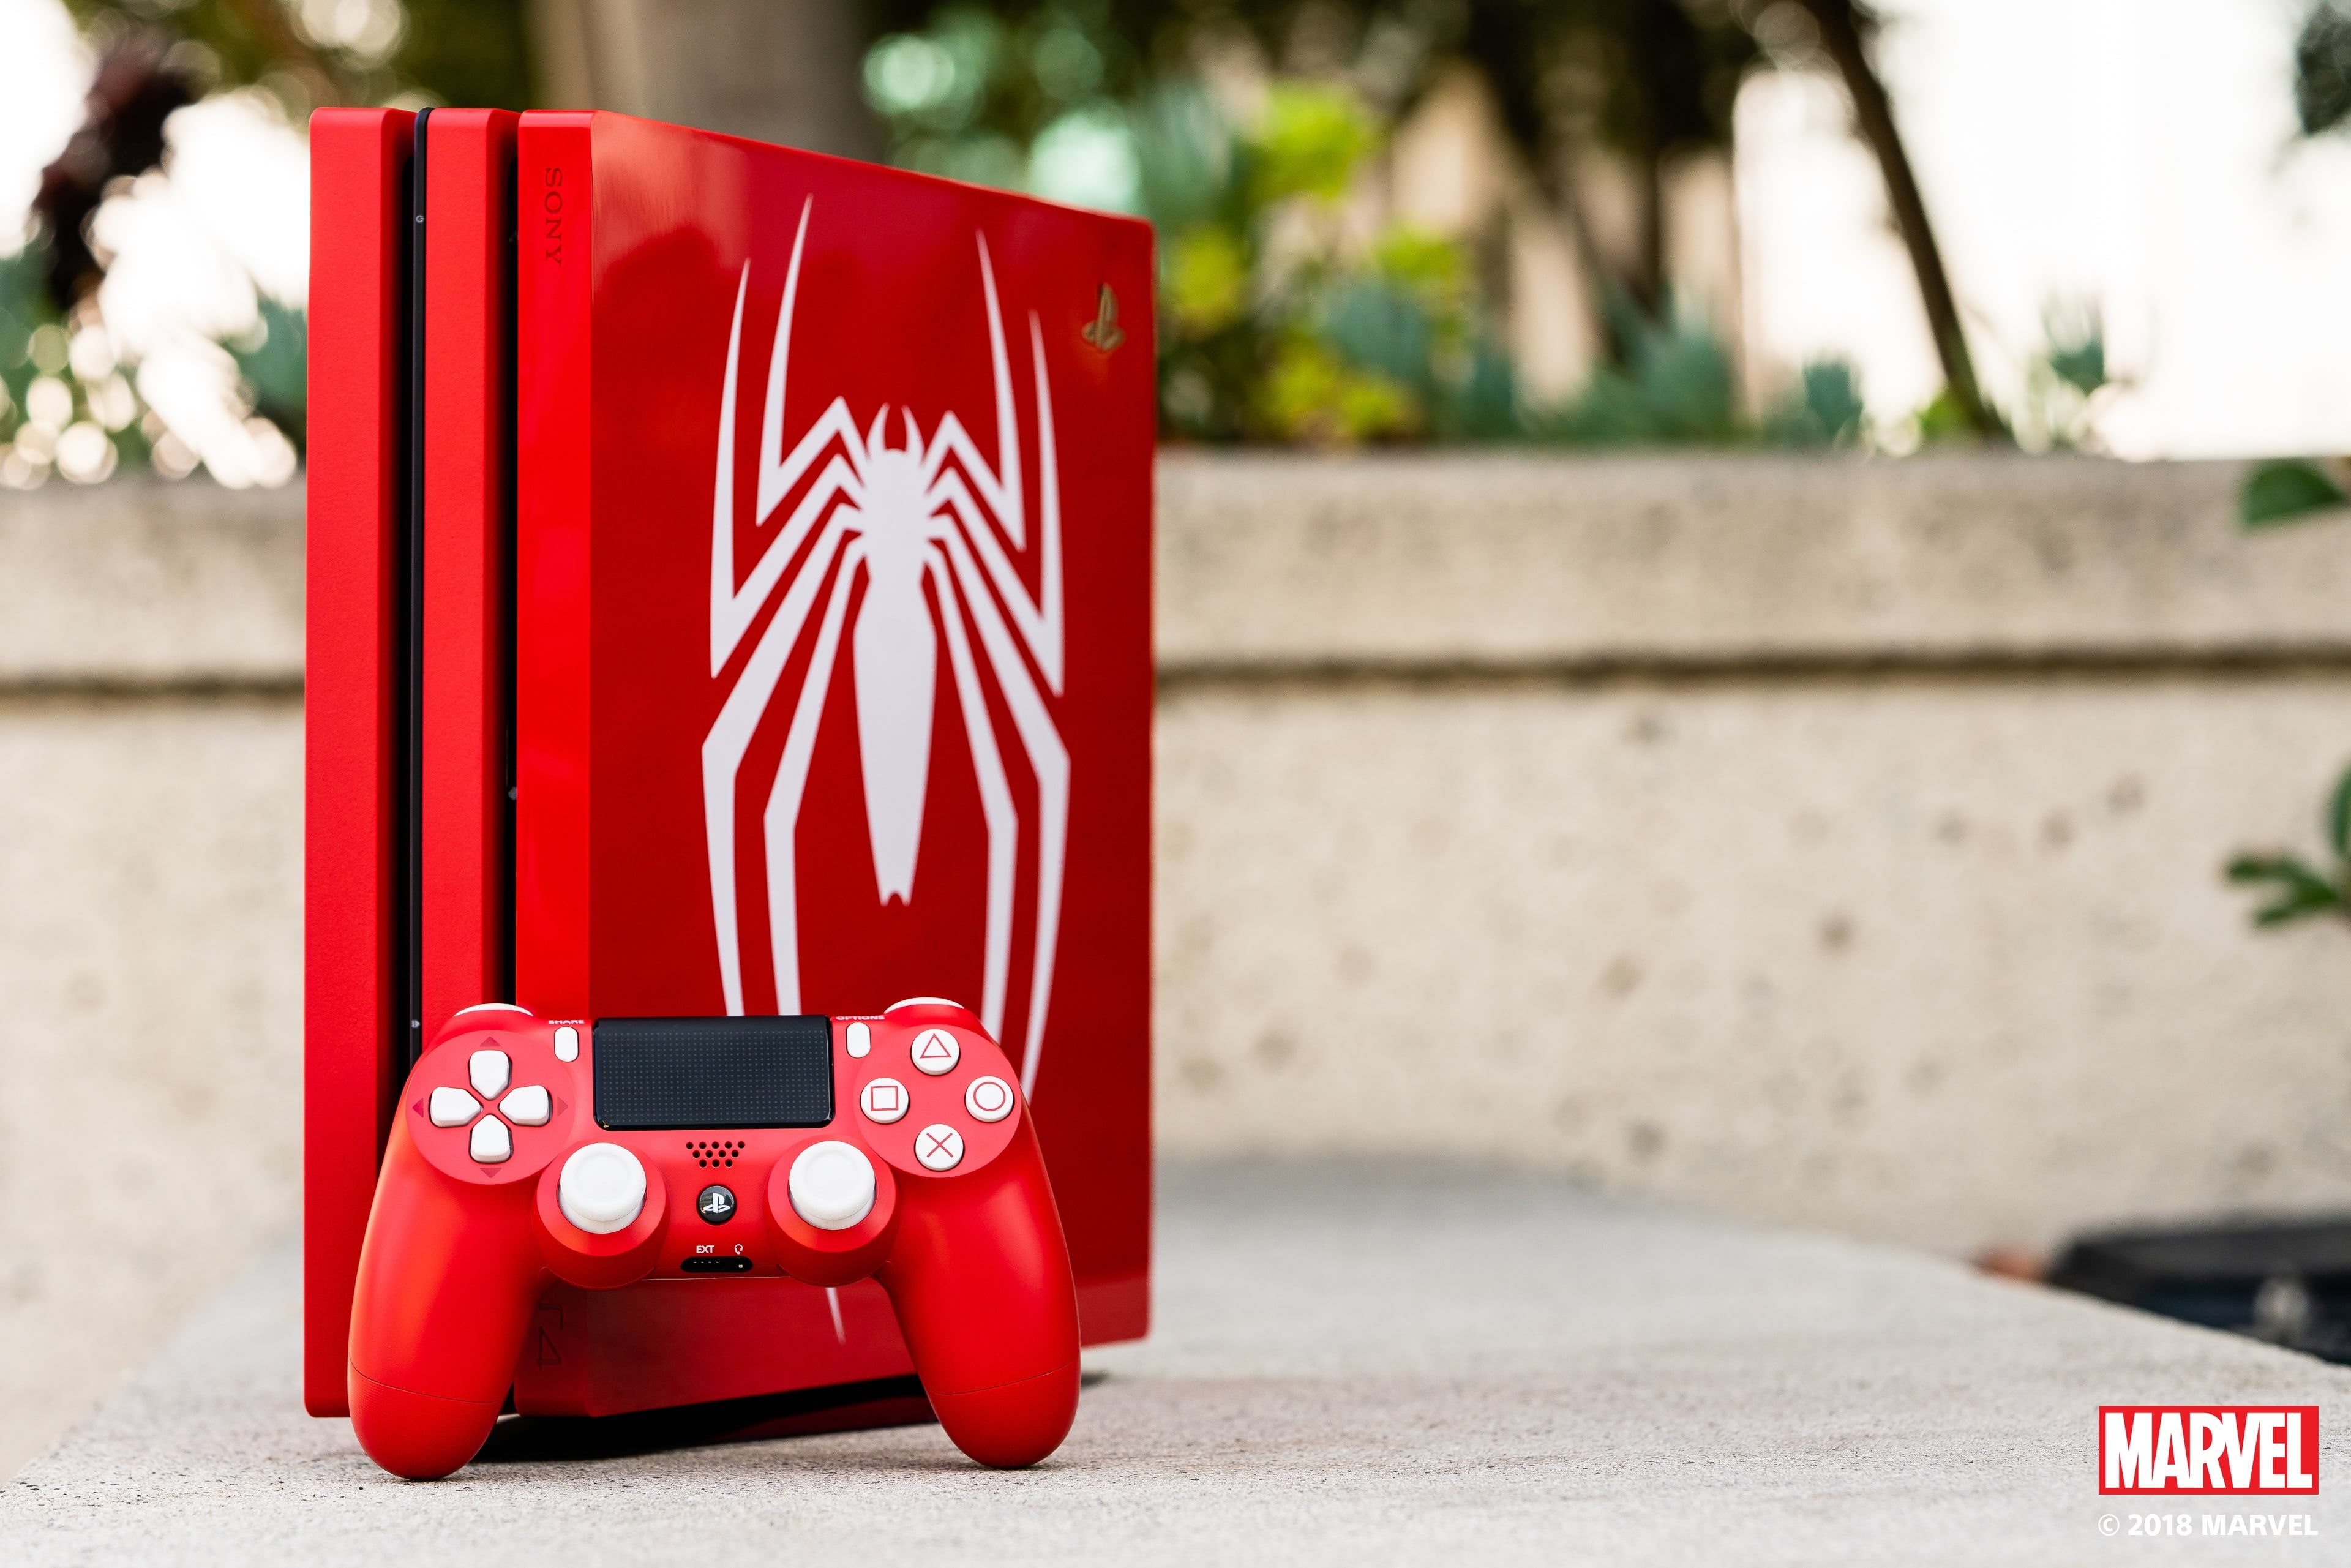 Marvel's Spider-Man Limited Edition PS4 Pro Bundle Gets Stunning